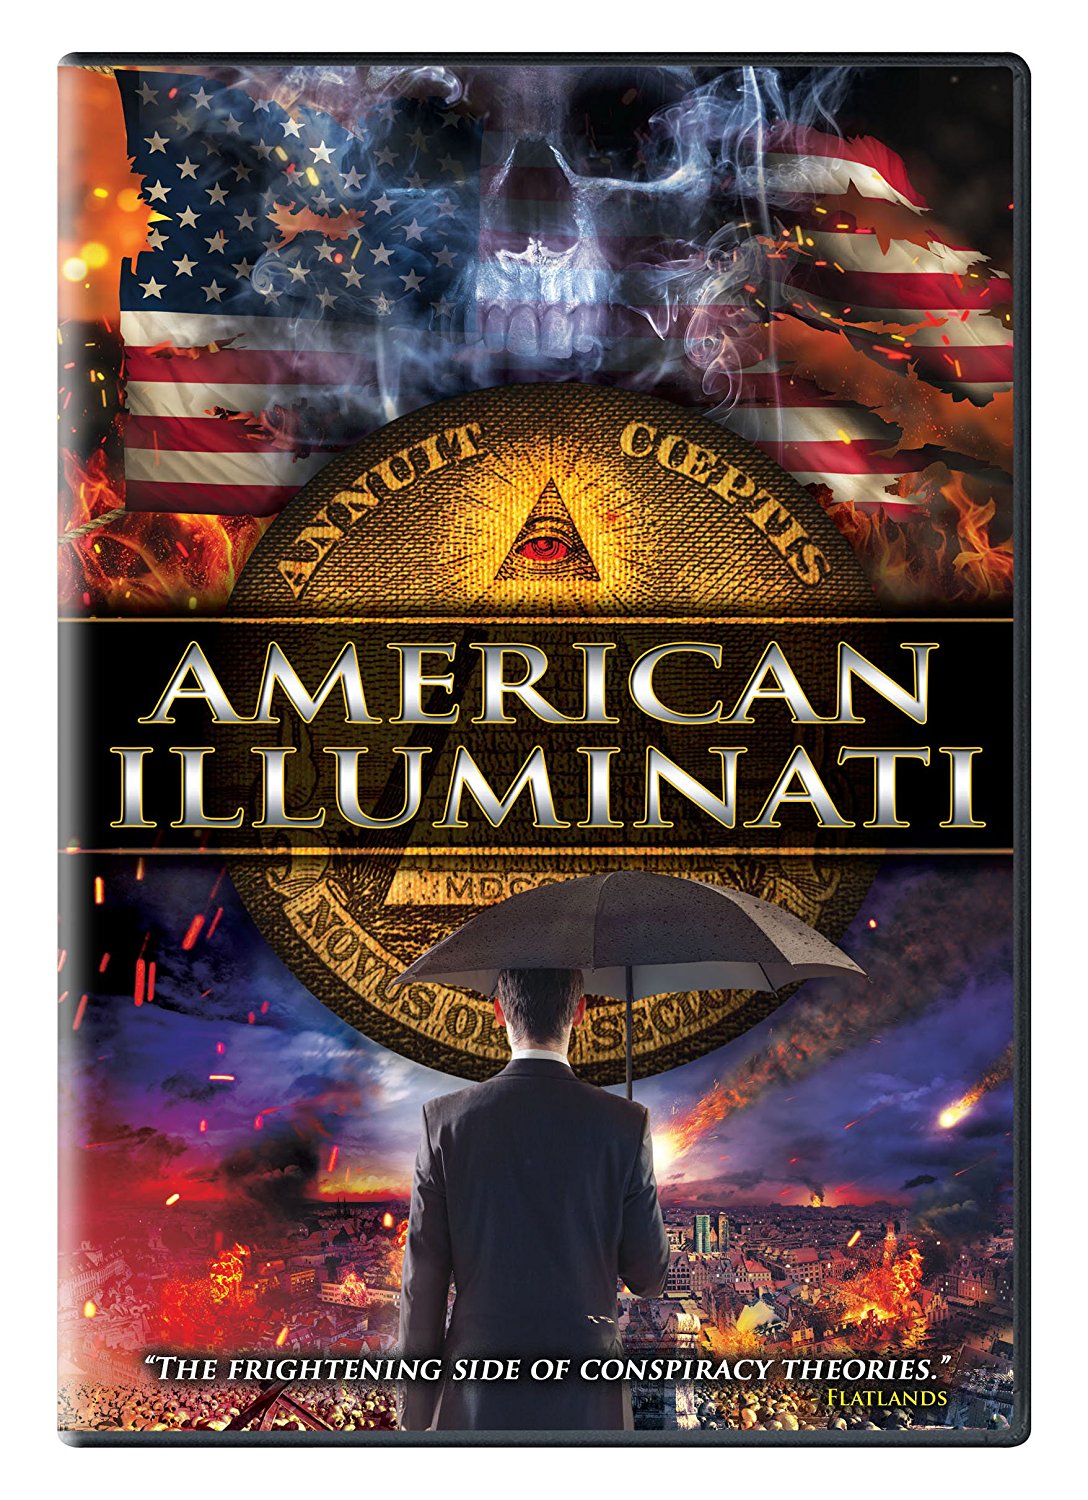 American Illuminati (2017) Screenshot 3 